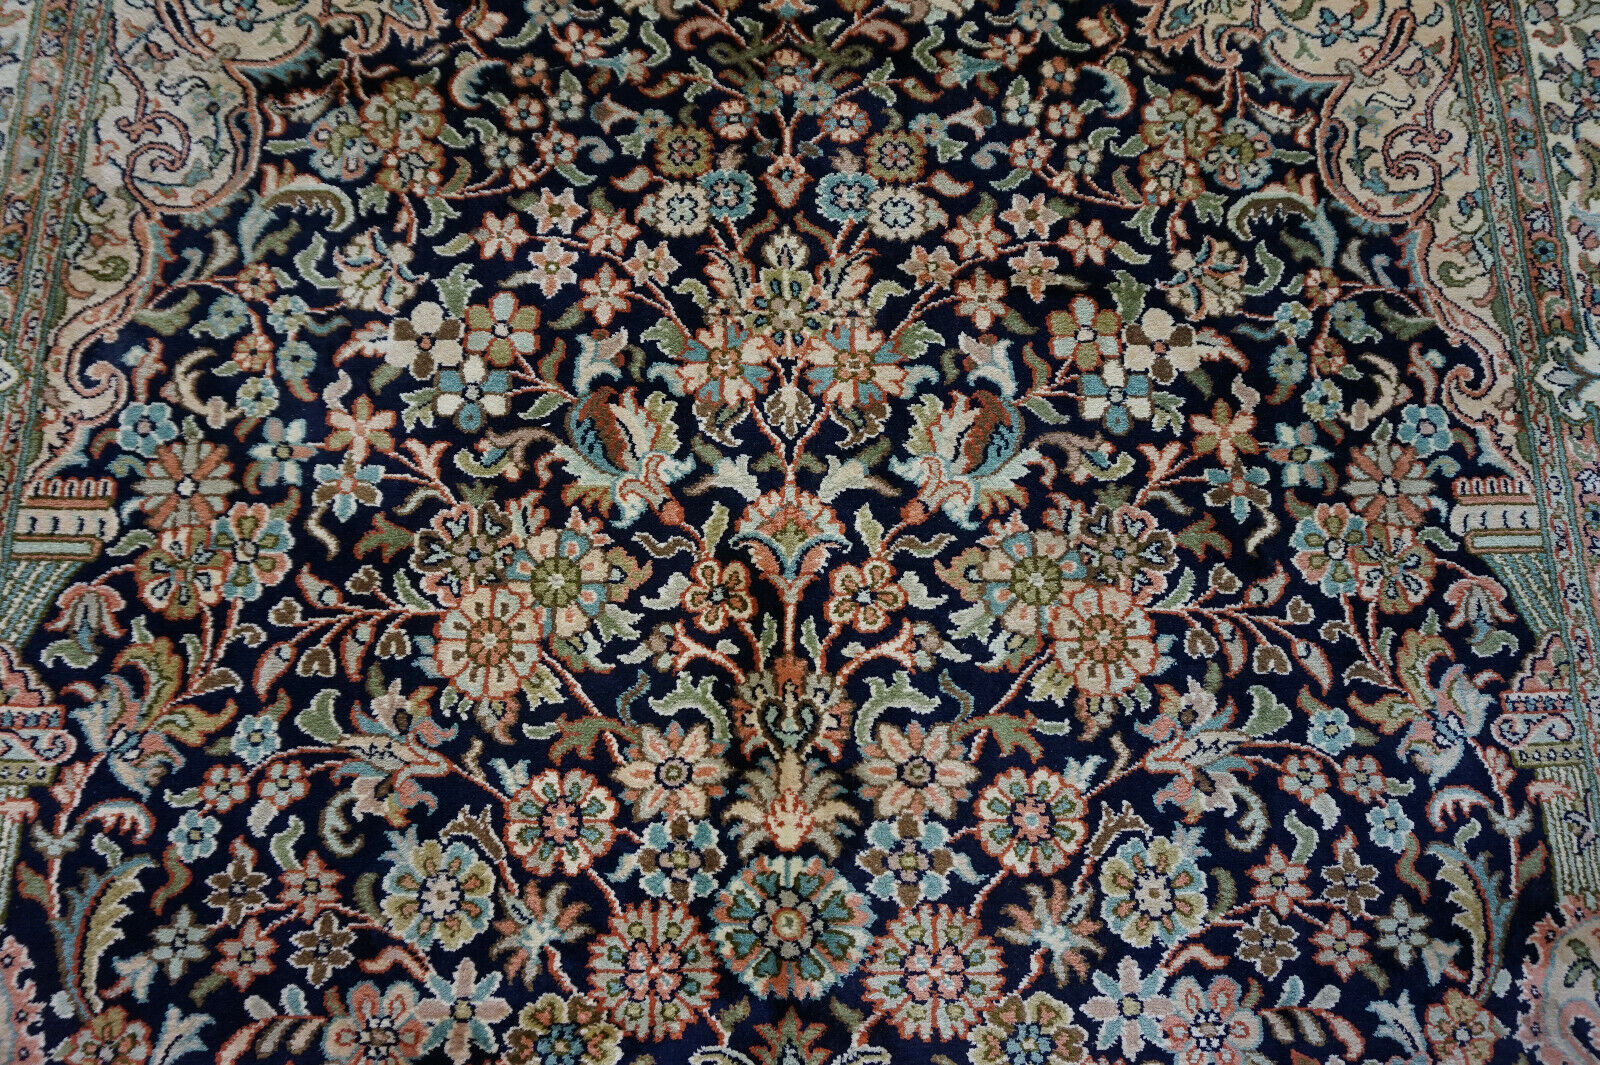 Detailed shot of the harmonious color palette on the Handmade Vintage Persian Kashmir Rug